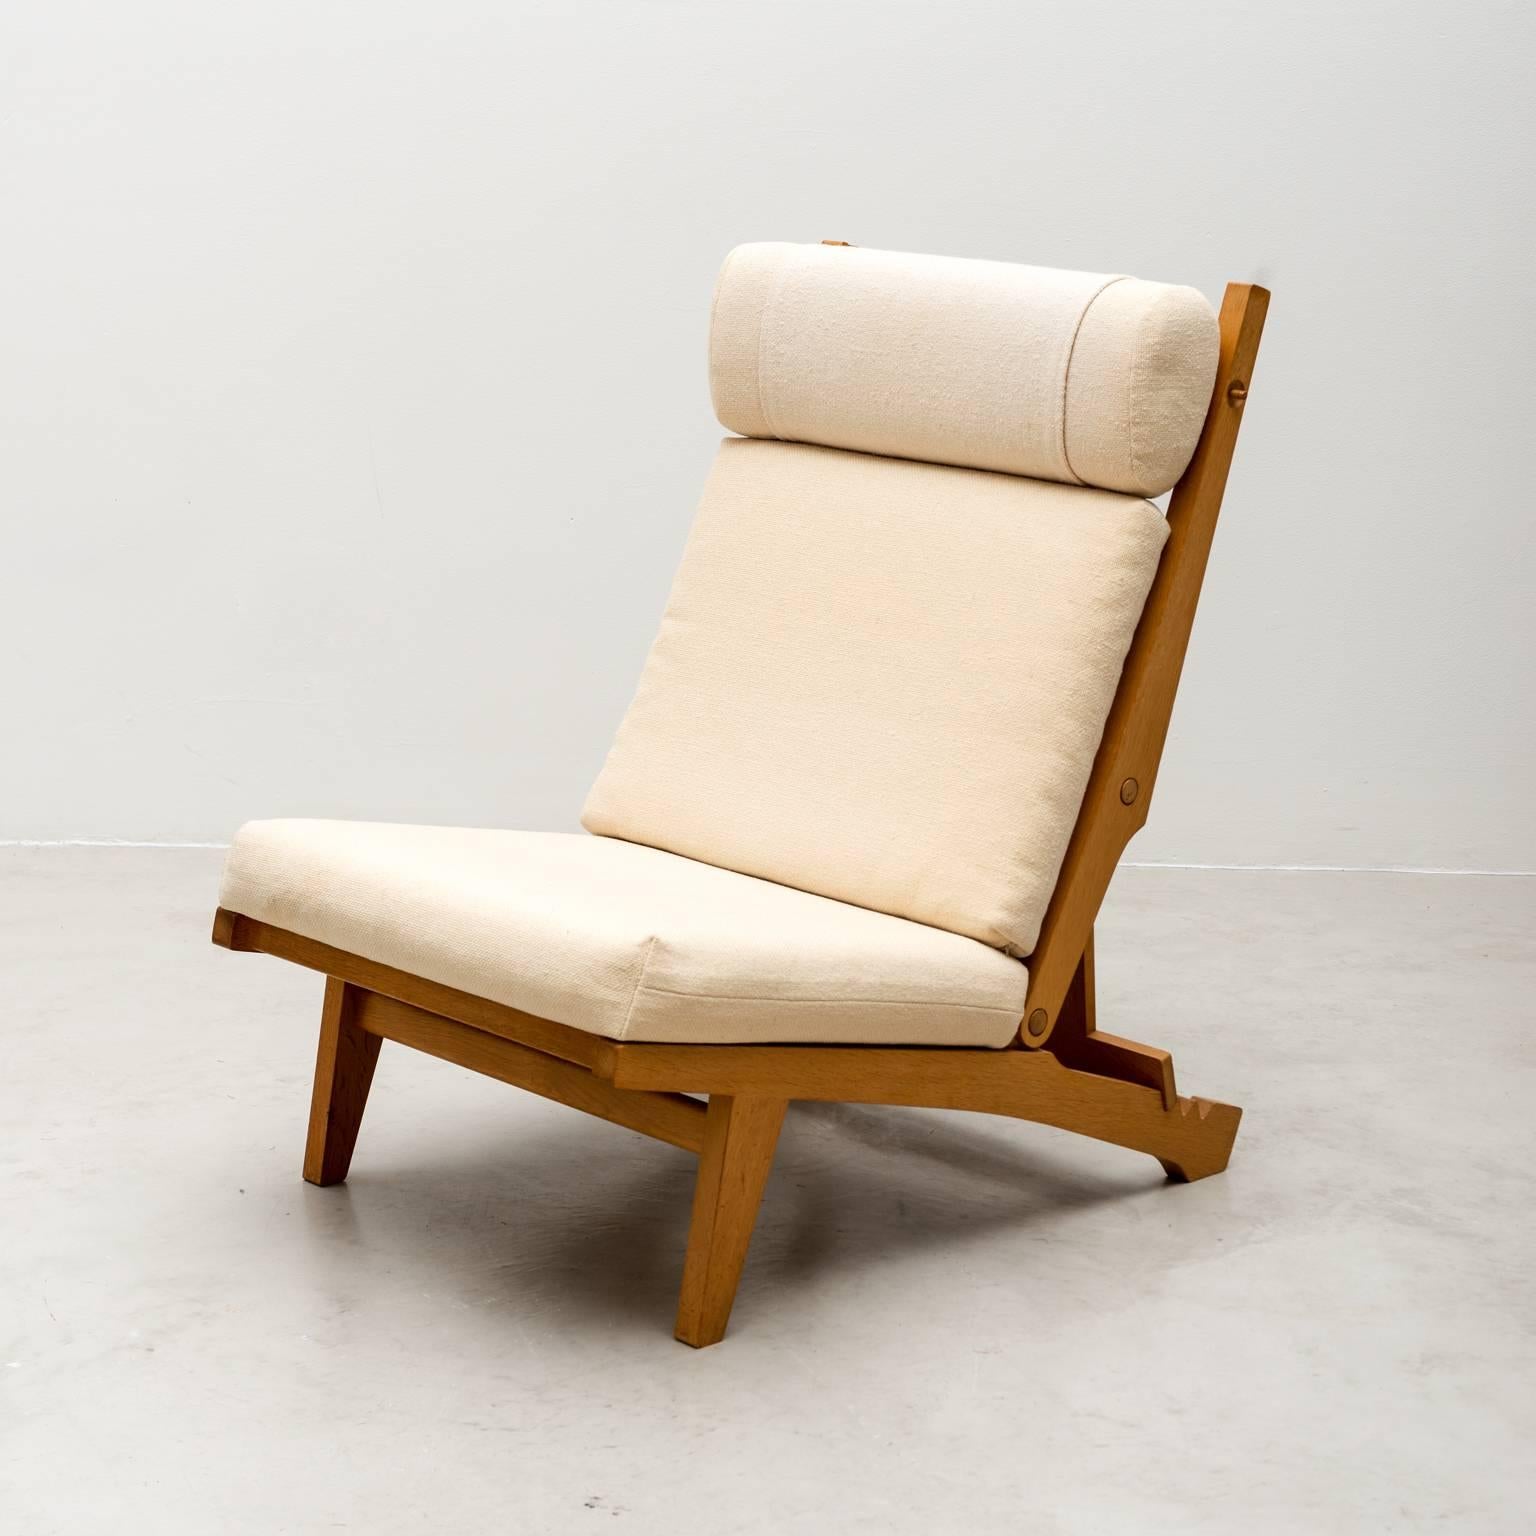 Scandinavian Modern Pair of Rare AP71 Folding Chairs by Hans Wegner for AP Stolen, Denmark 1968